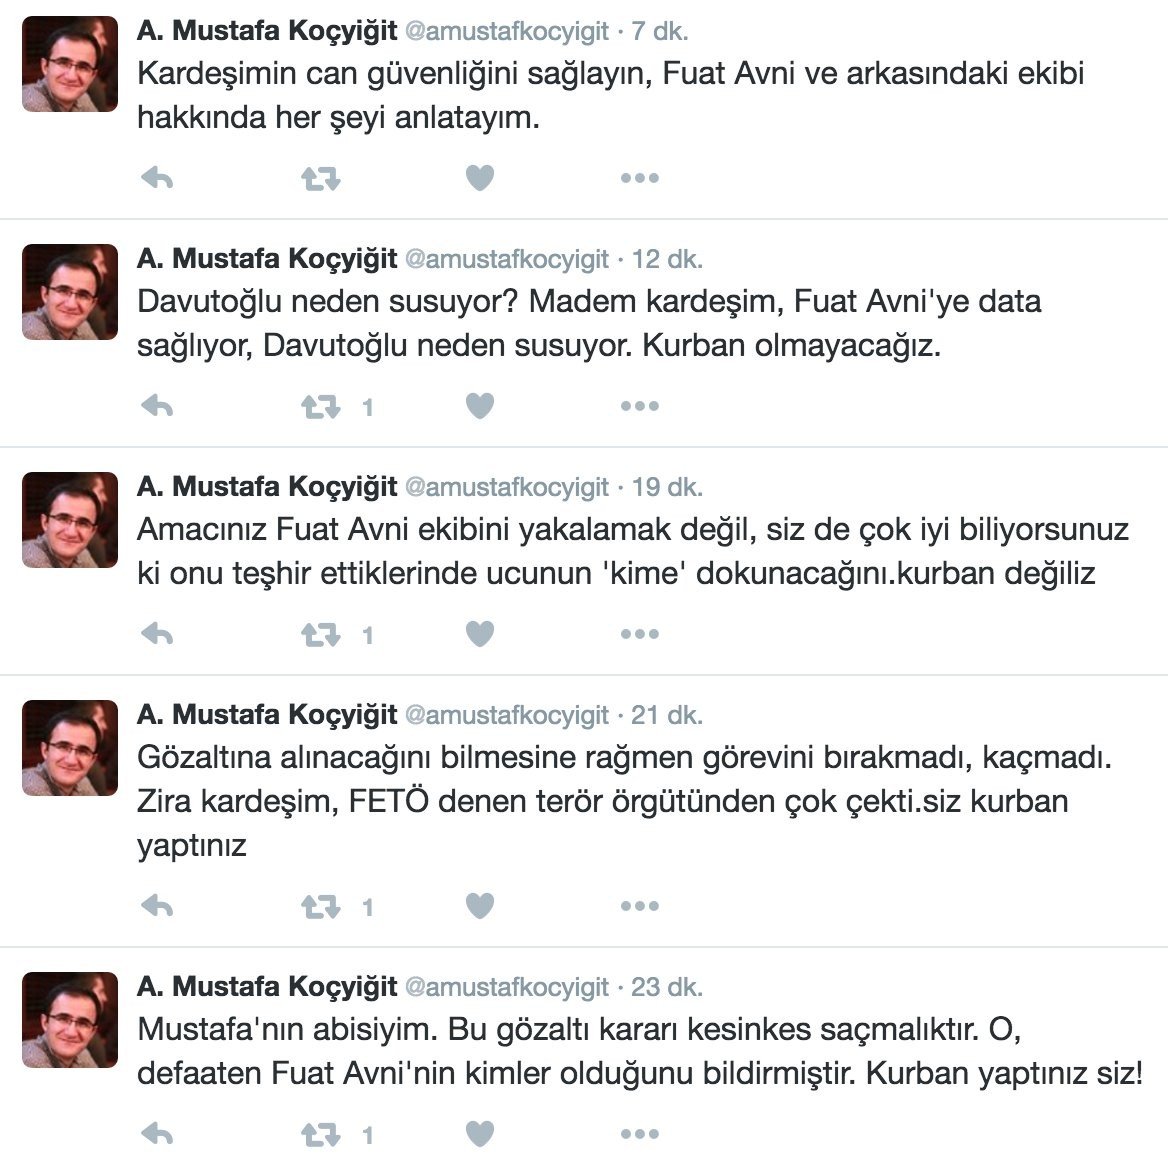 Akif Mustafa Koçyiğit twitleri